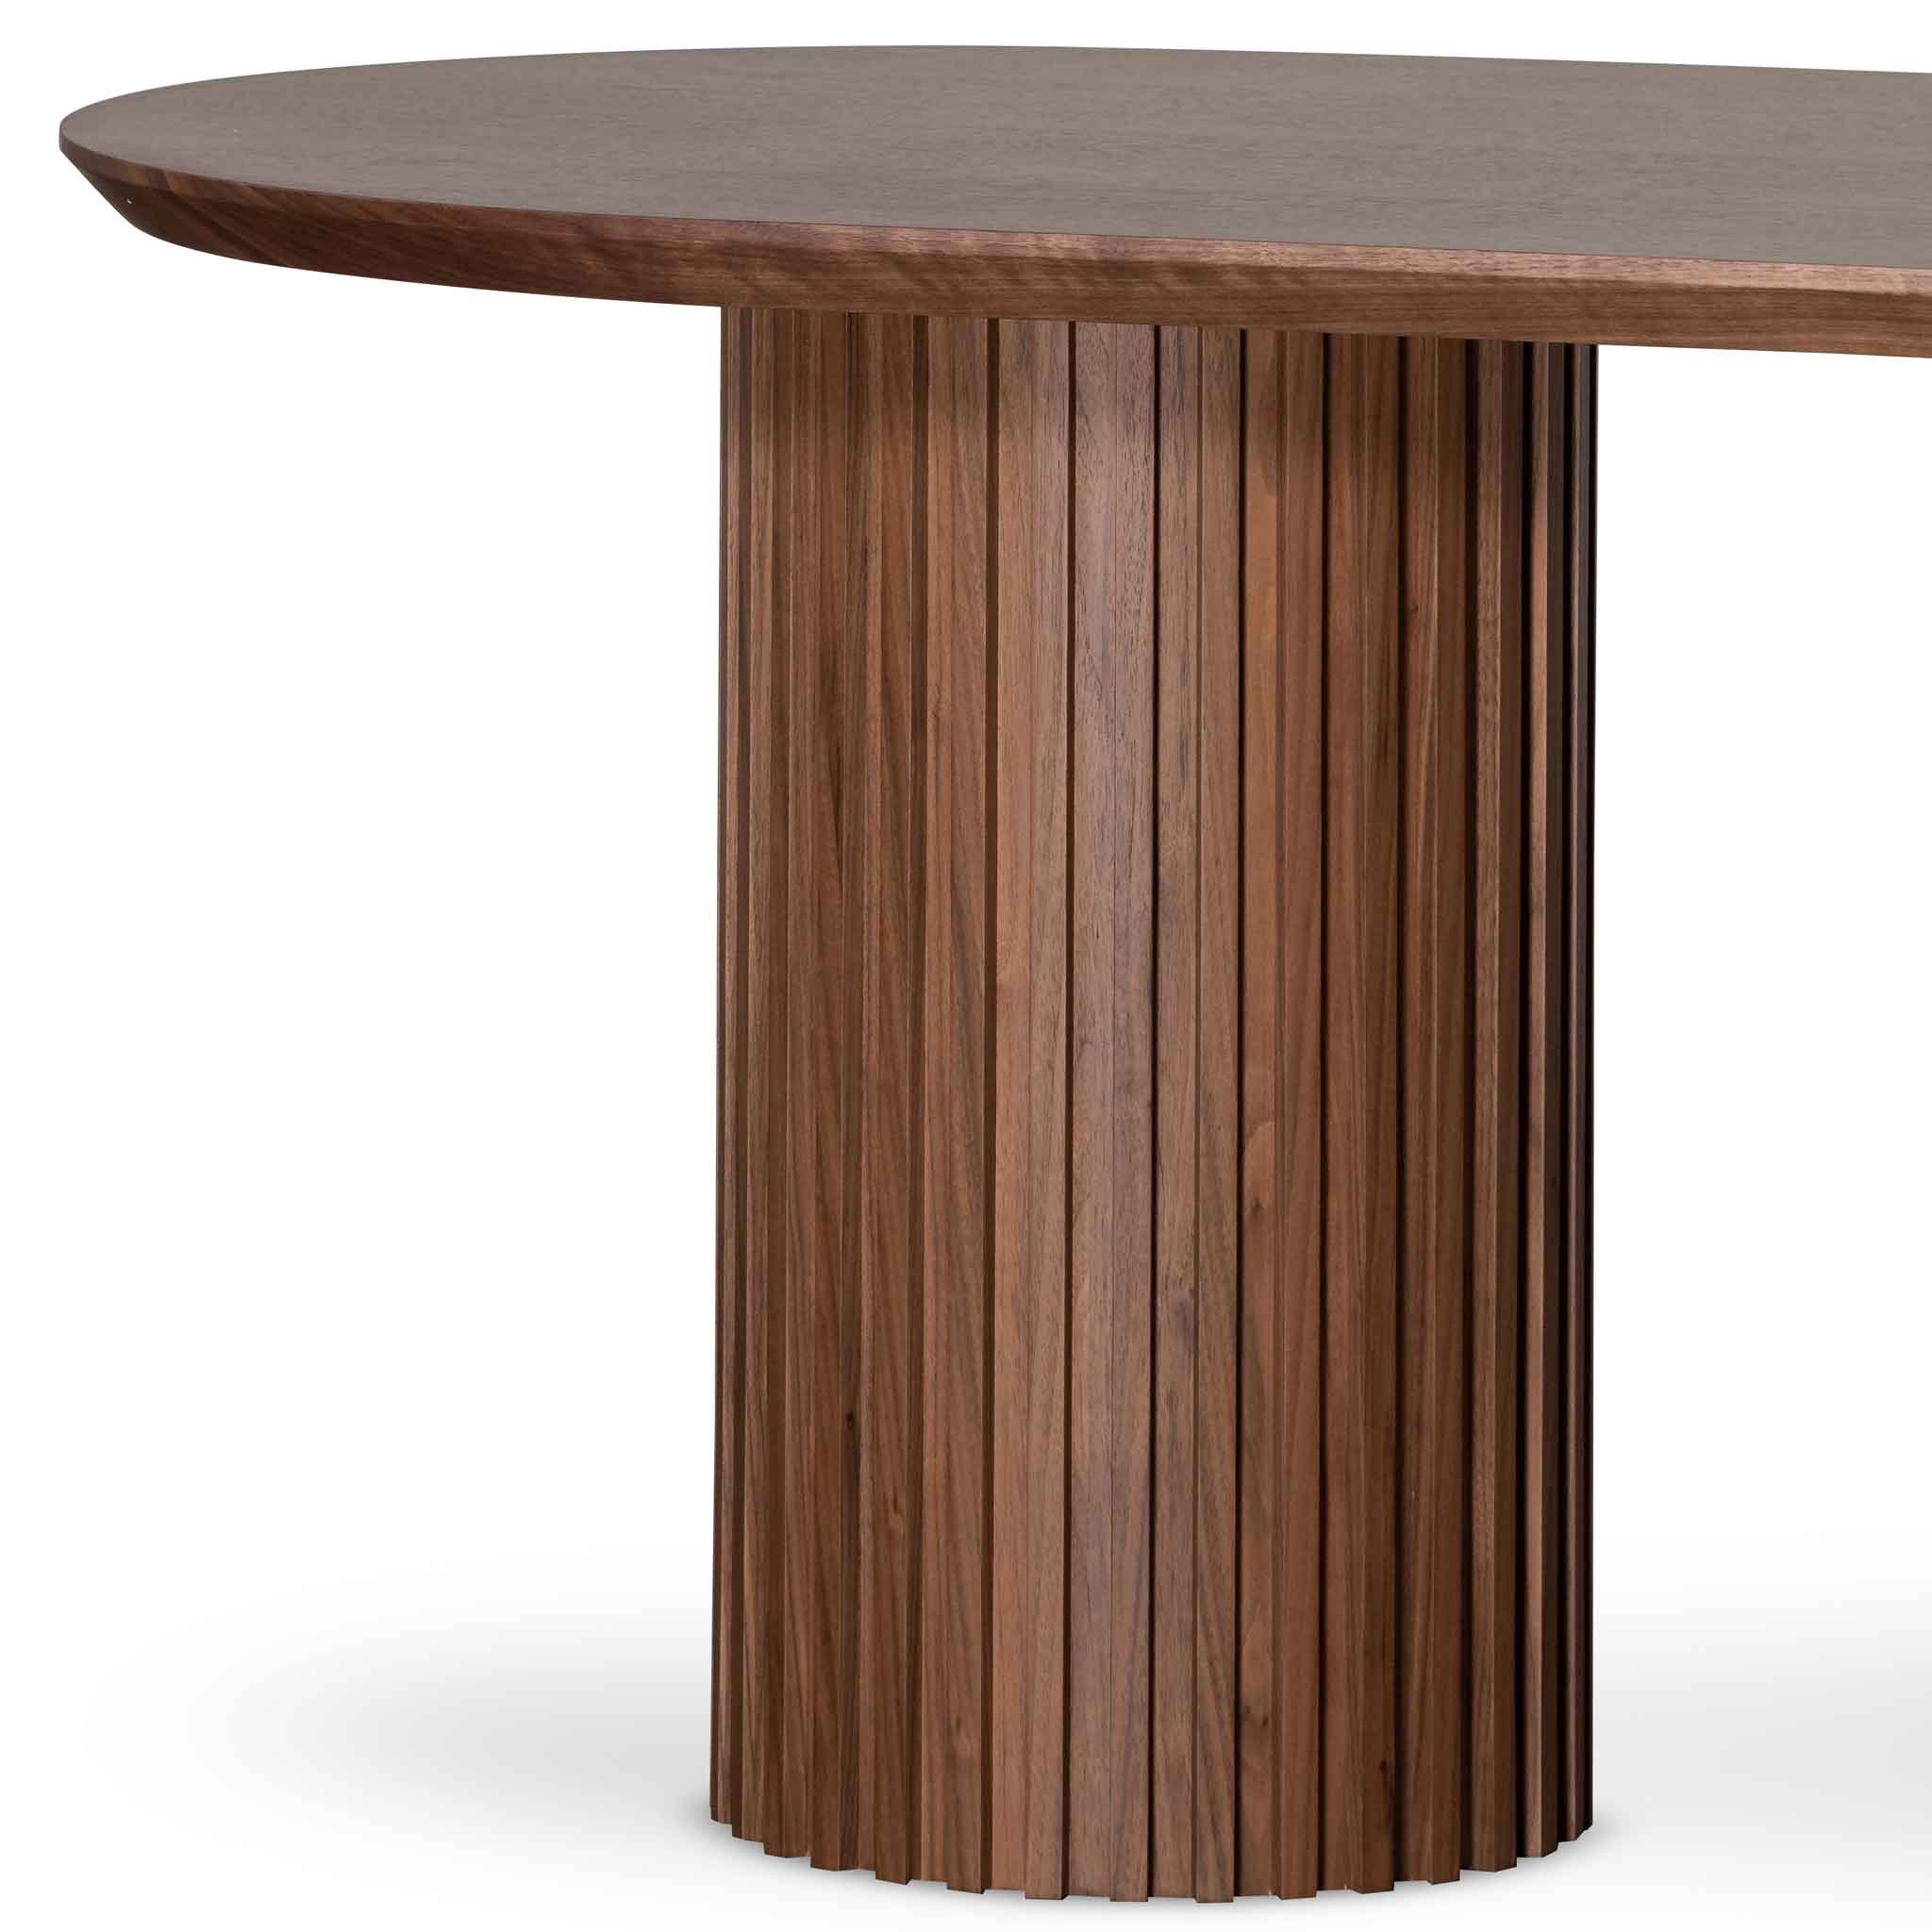 Vics 2.2m Wooden Dining Table - Walnut - Dining Tables